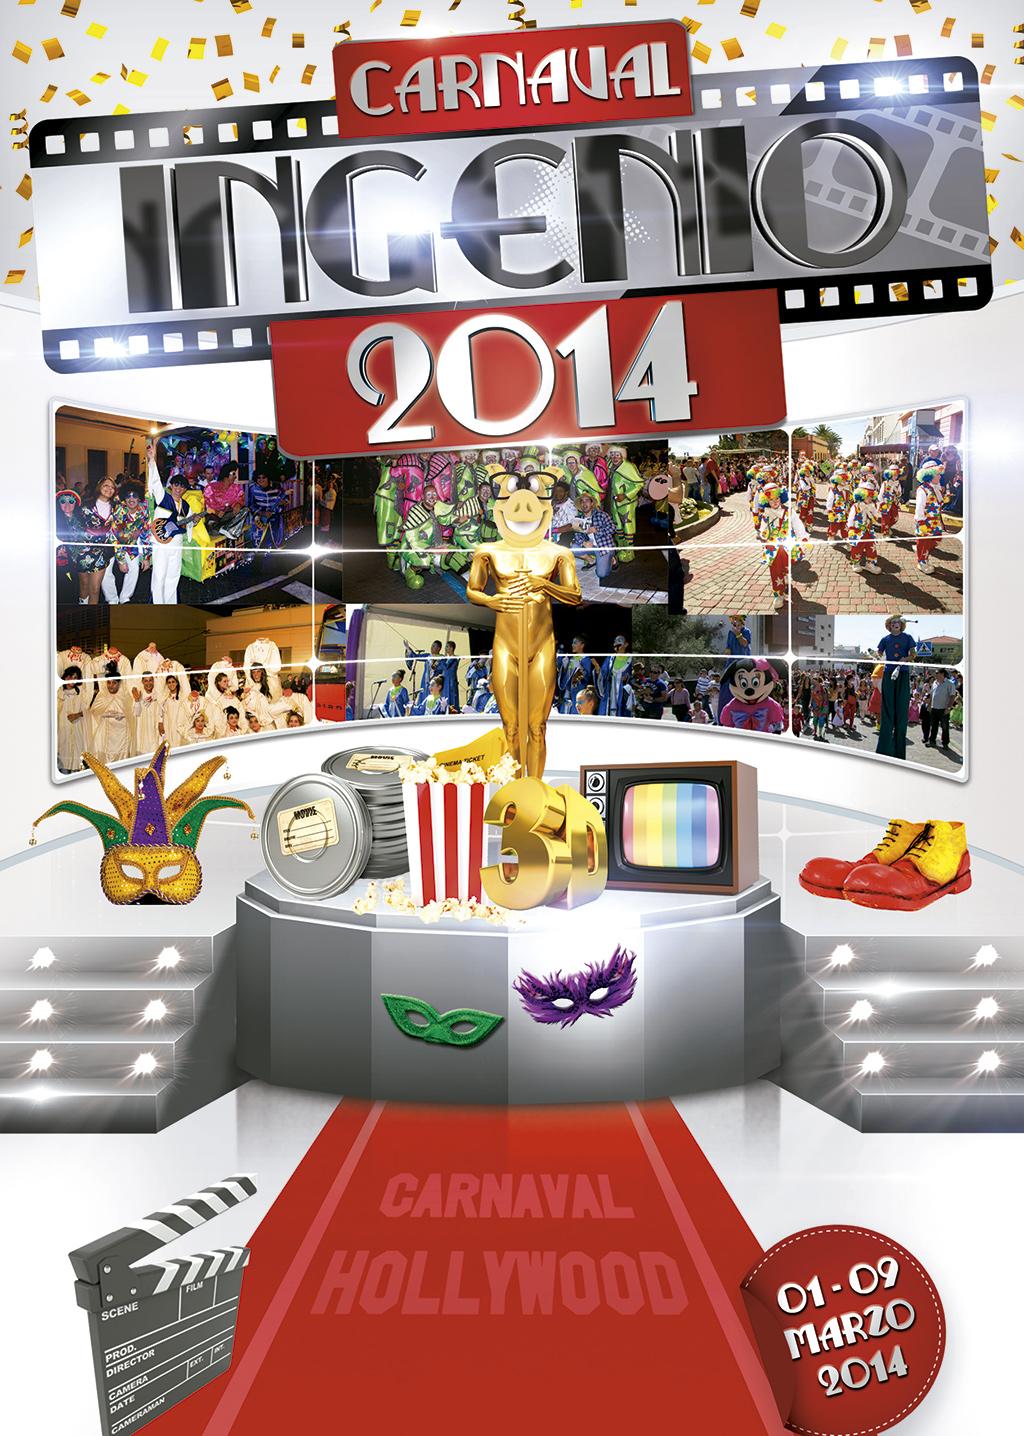 Promo Carnaval de Ingenio Hollywood 2014